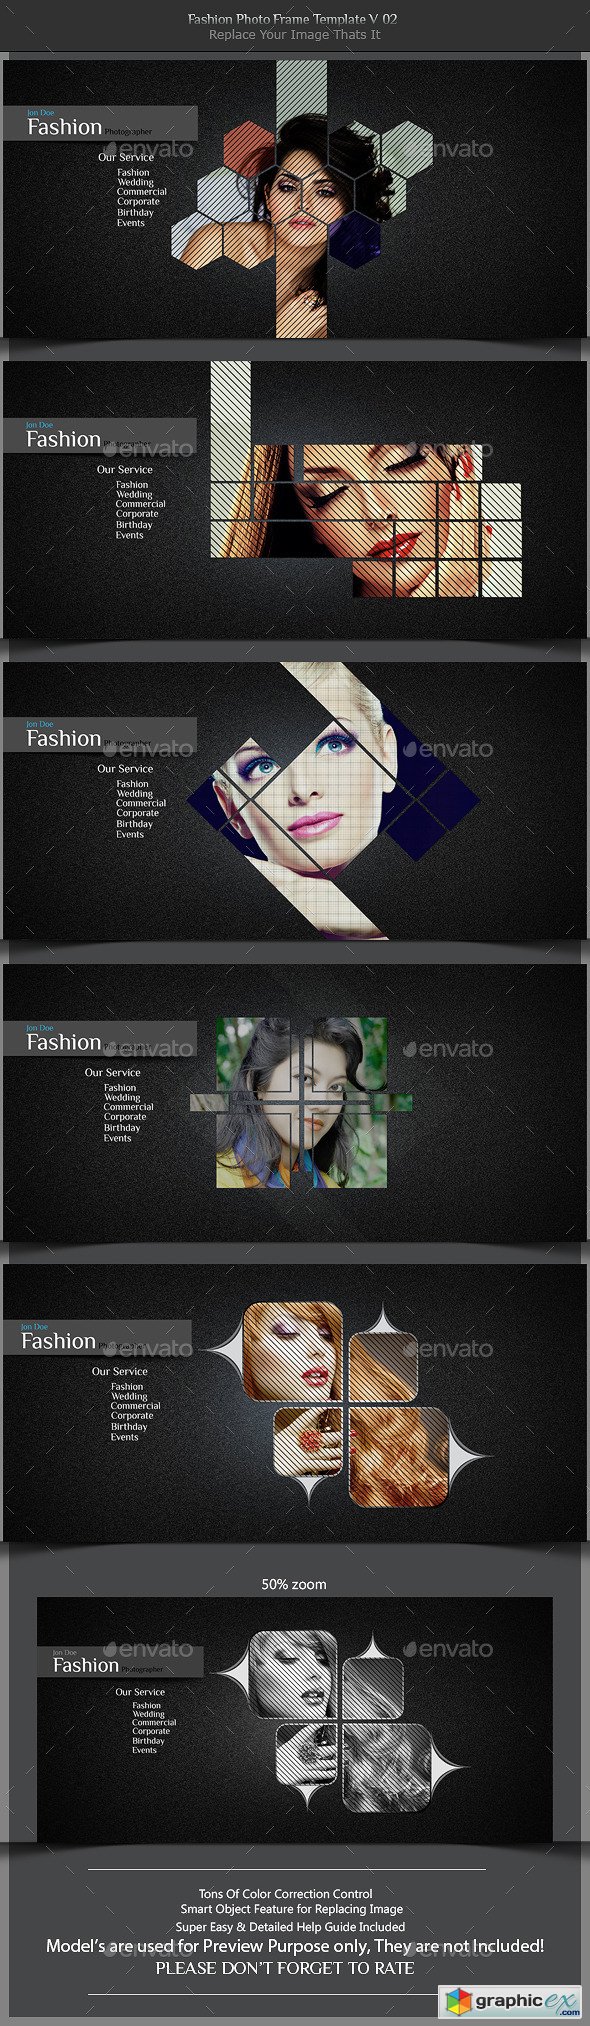 Fashion Photo Frame Template v02